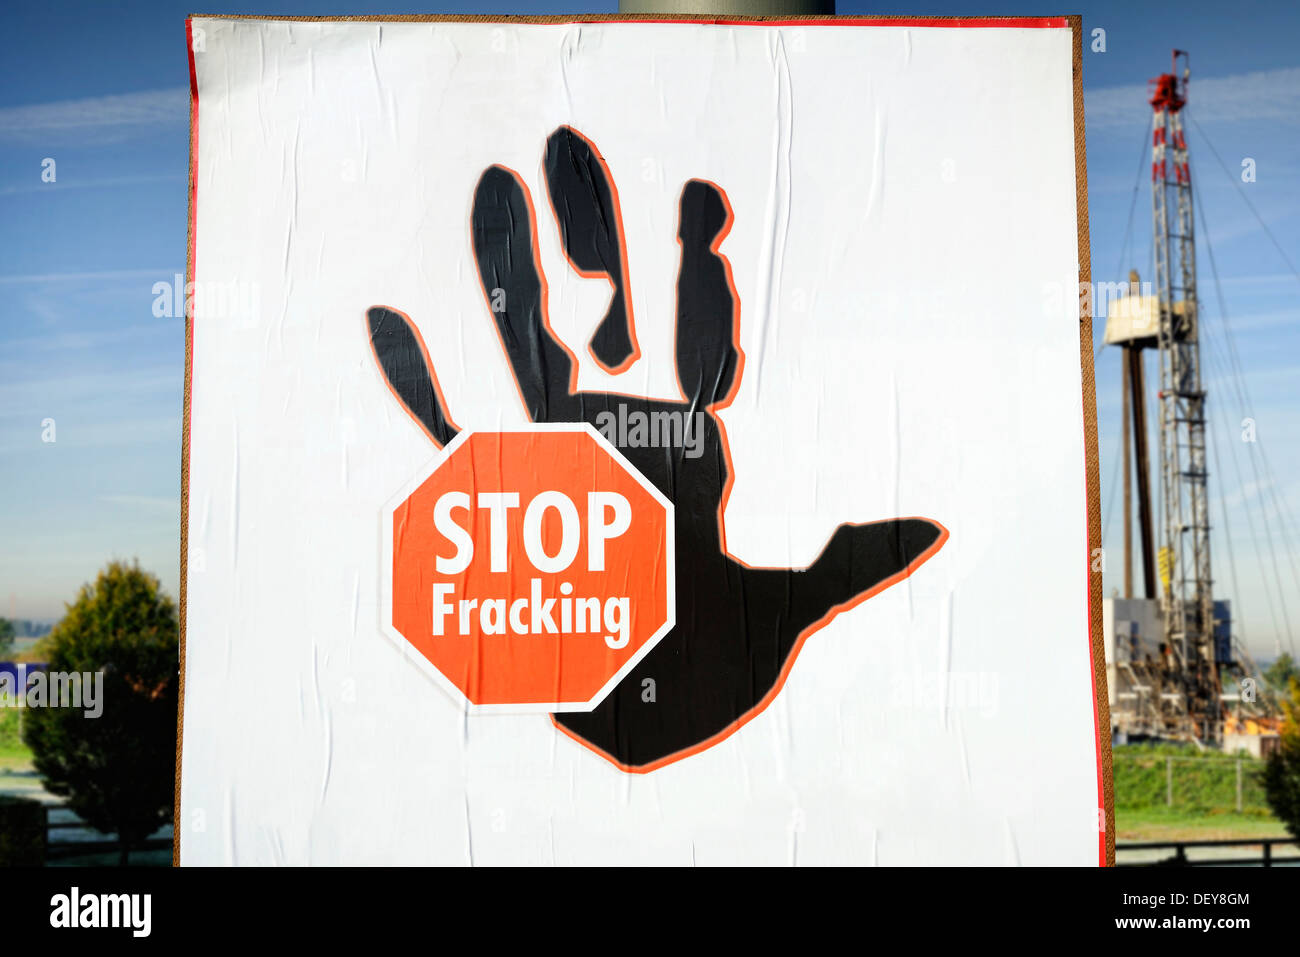 Cartel de protesta contra el Fracking plataforma petrolífera y de gas natural, la imagen general, Protestplakat gegen Fracking und Erdgasbohrturm, Bild Foto de stock